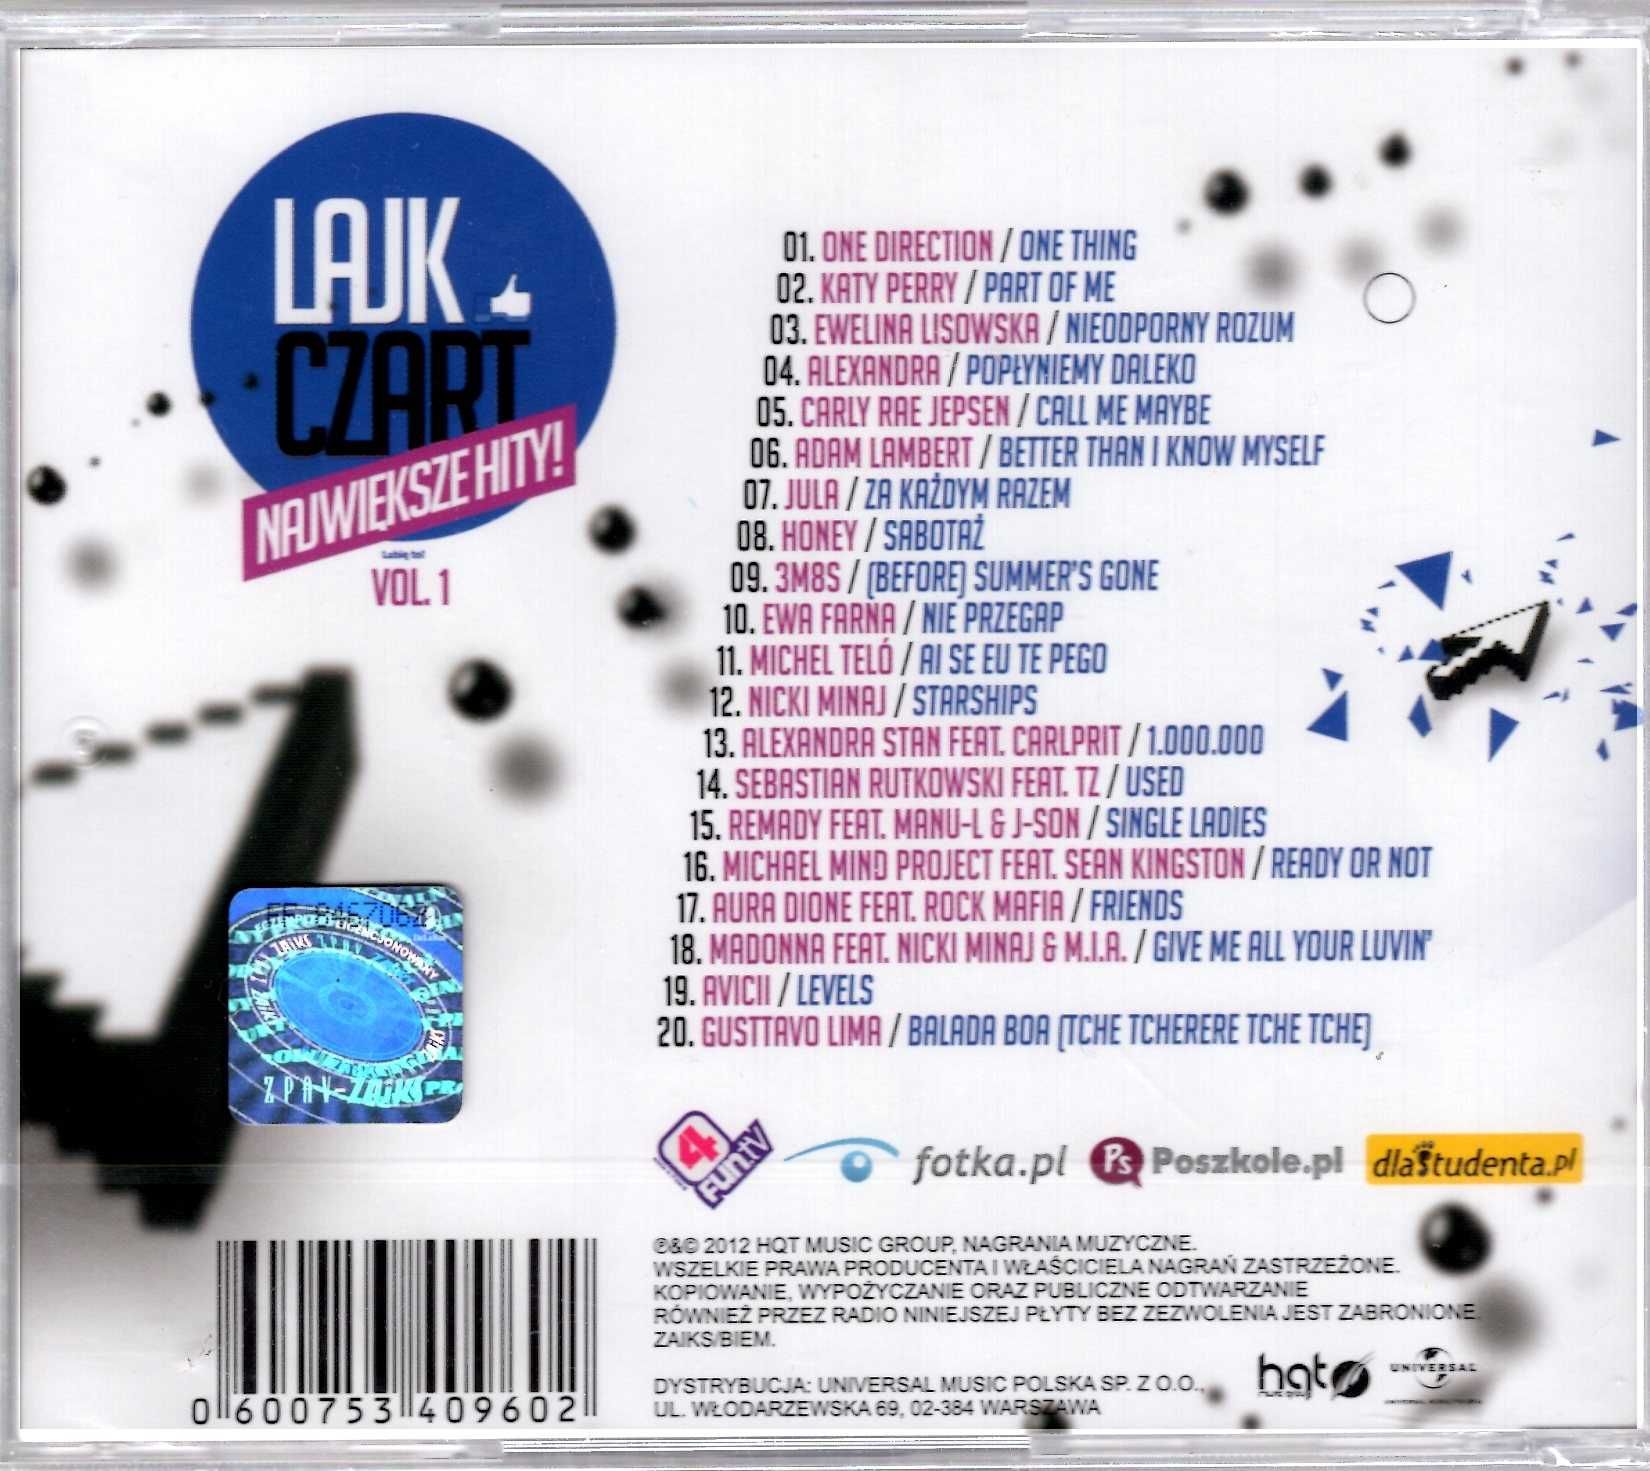 4 Fun TV Lajk Czart Vol.1 (CD) One Direction Katy Perry